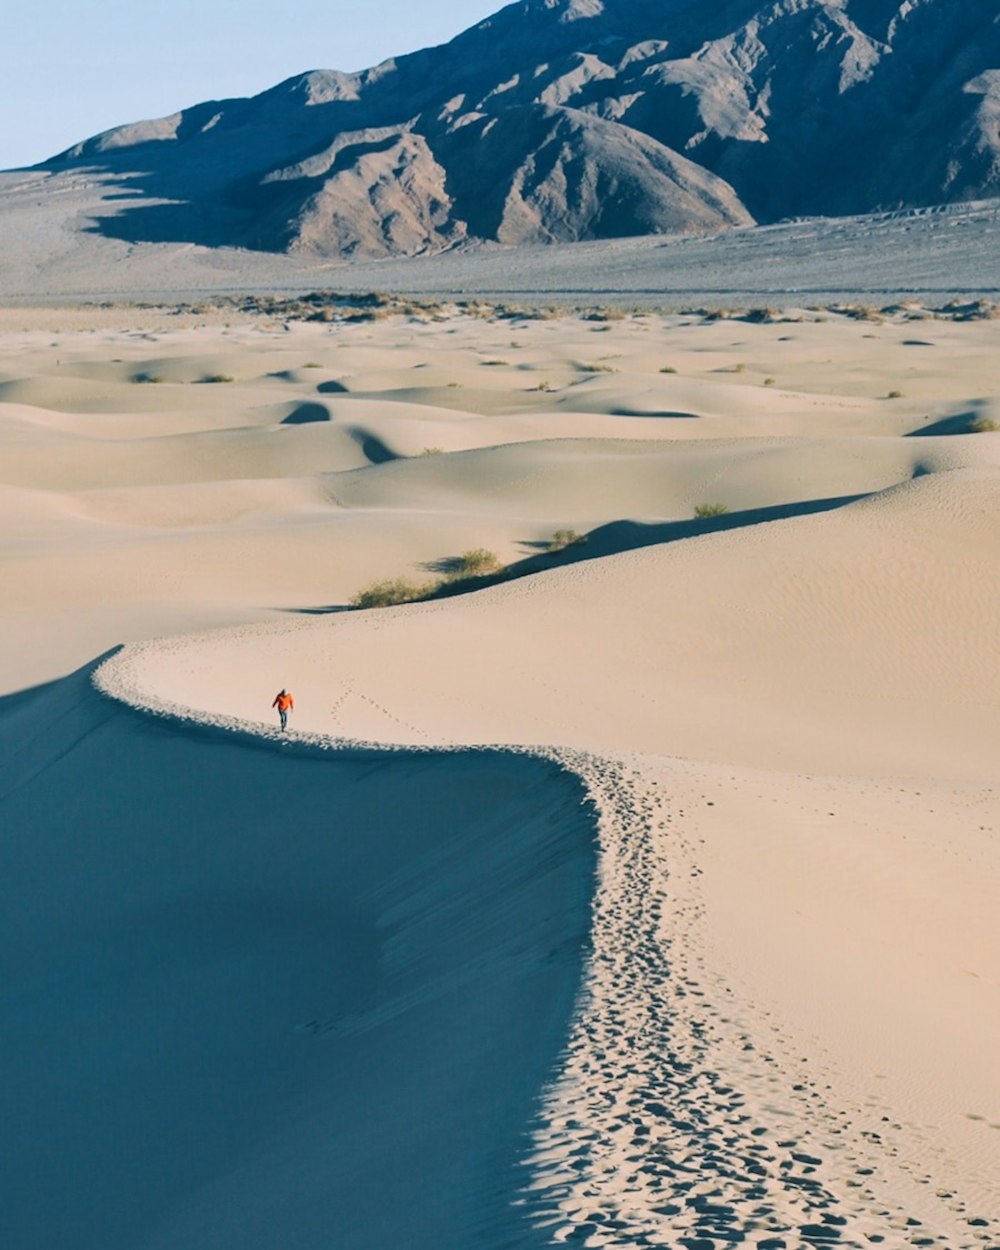 man walking on desert